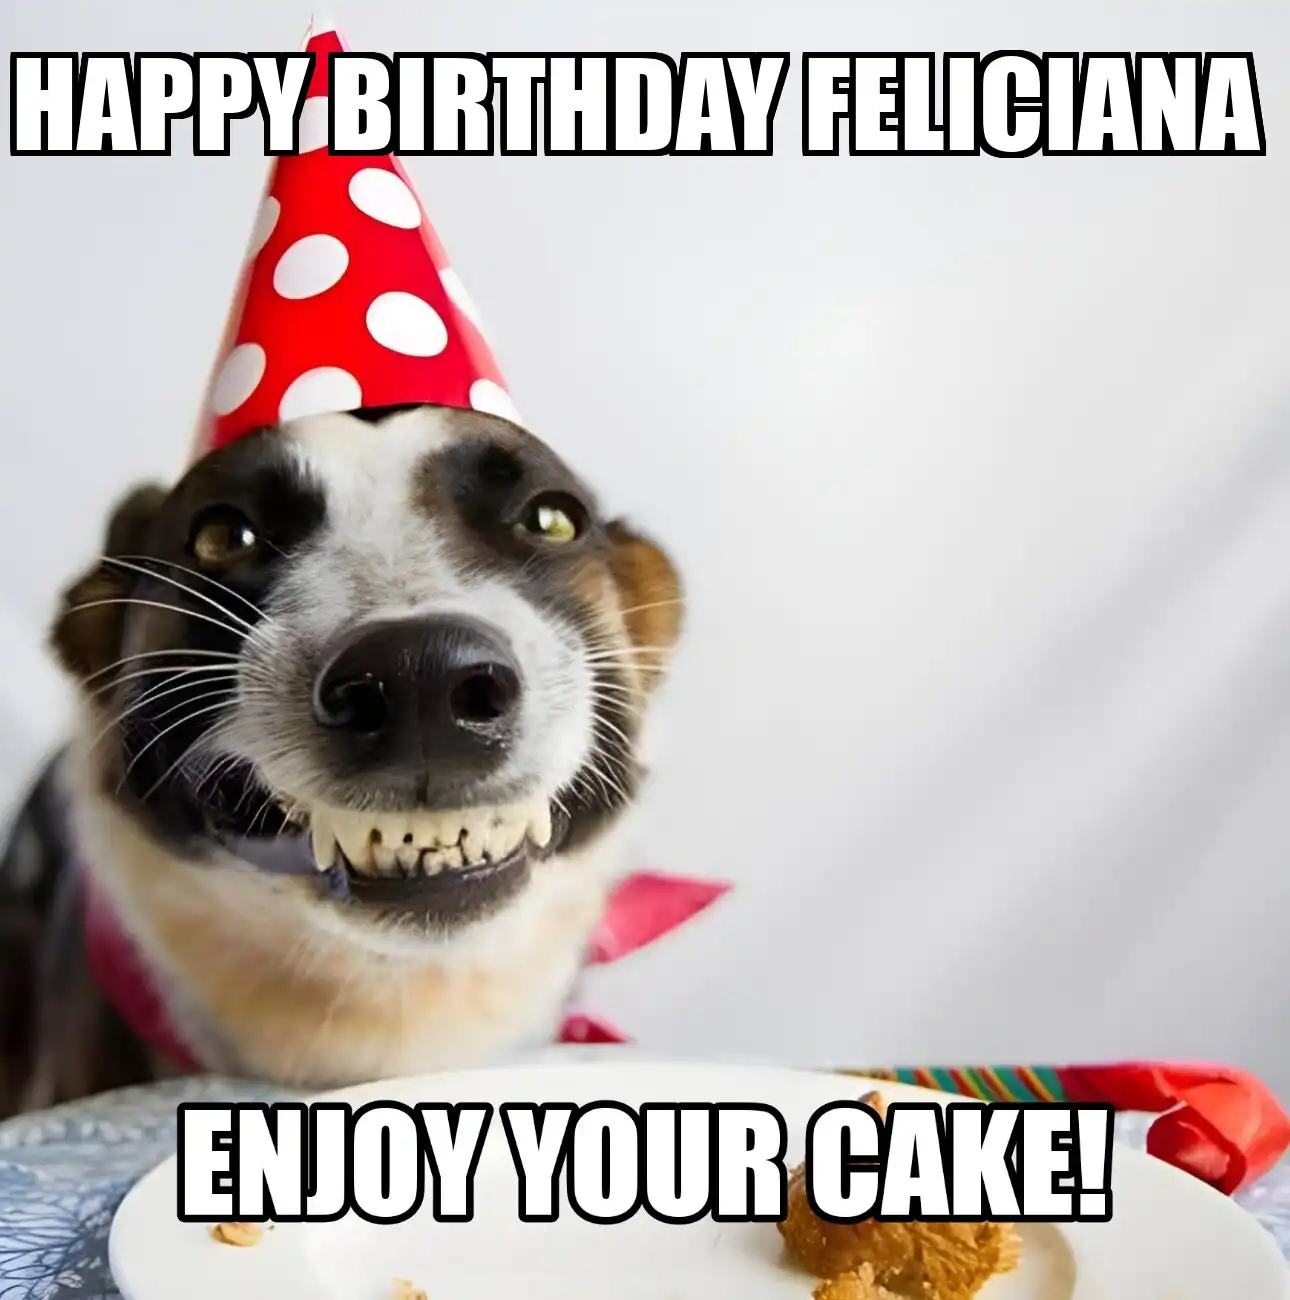 Happy Birthday Feliciana Enjoy Your Cake Dog Meme